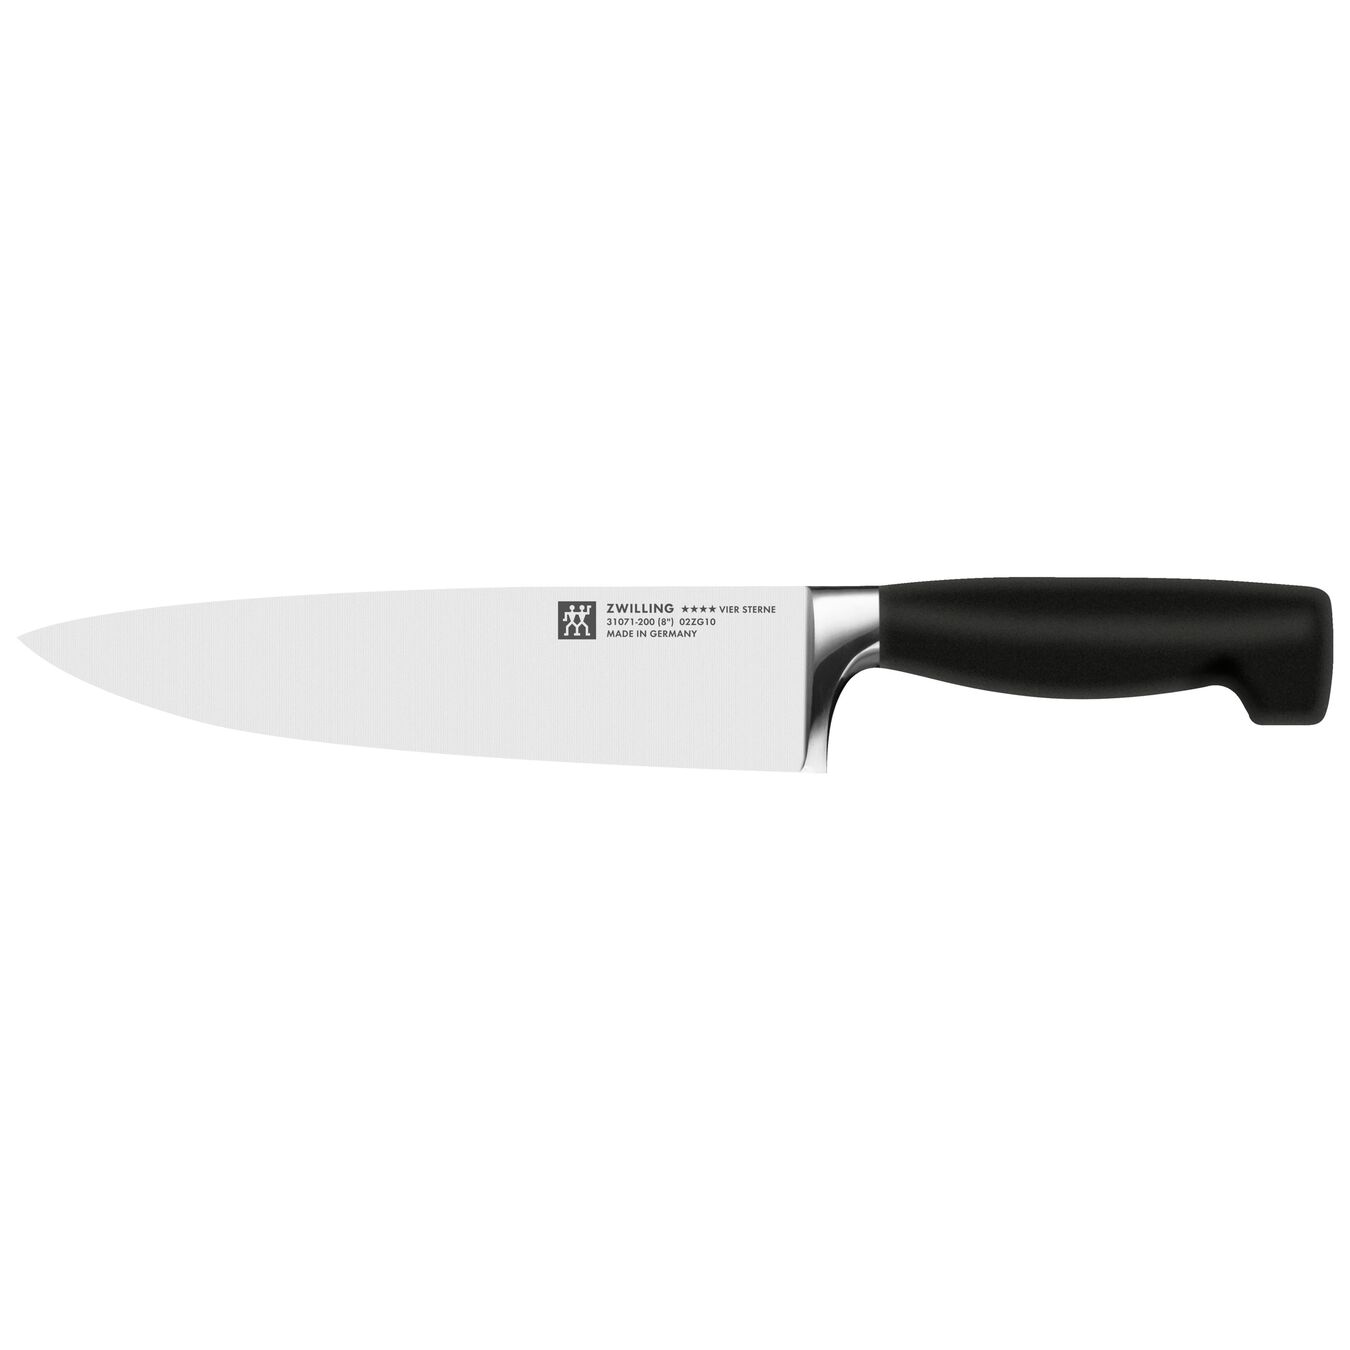 7-pcs brown Knife block set with KiS technology,,large 10